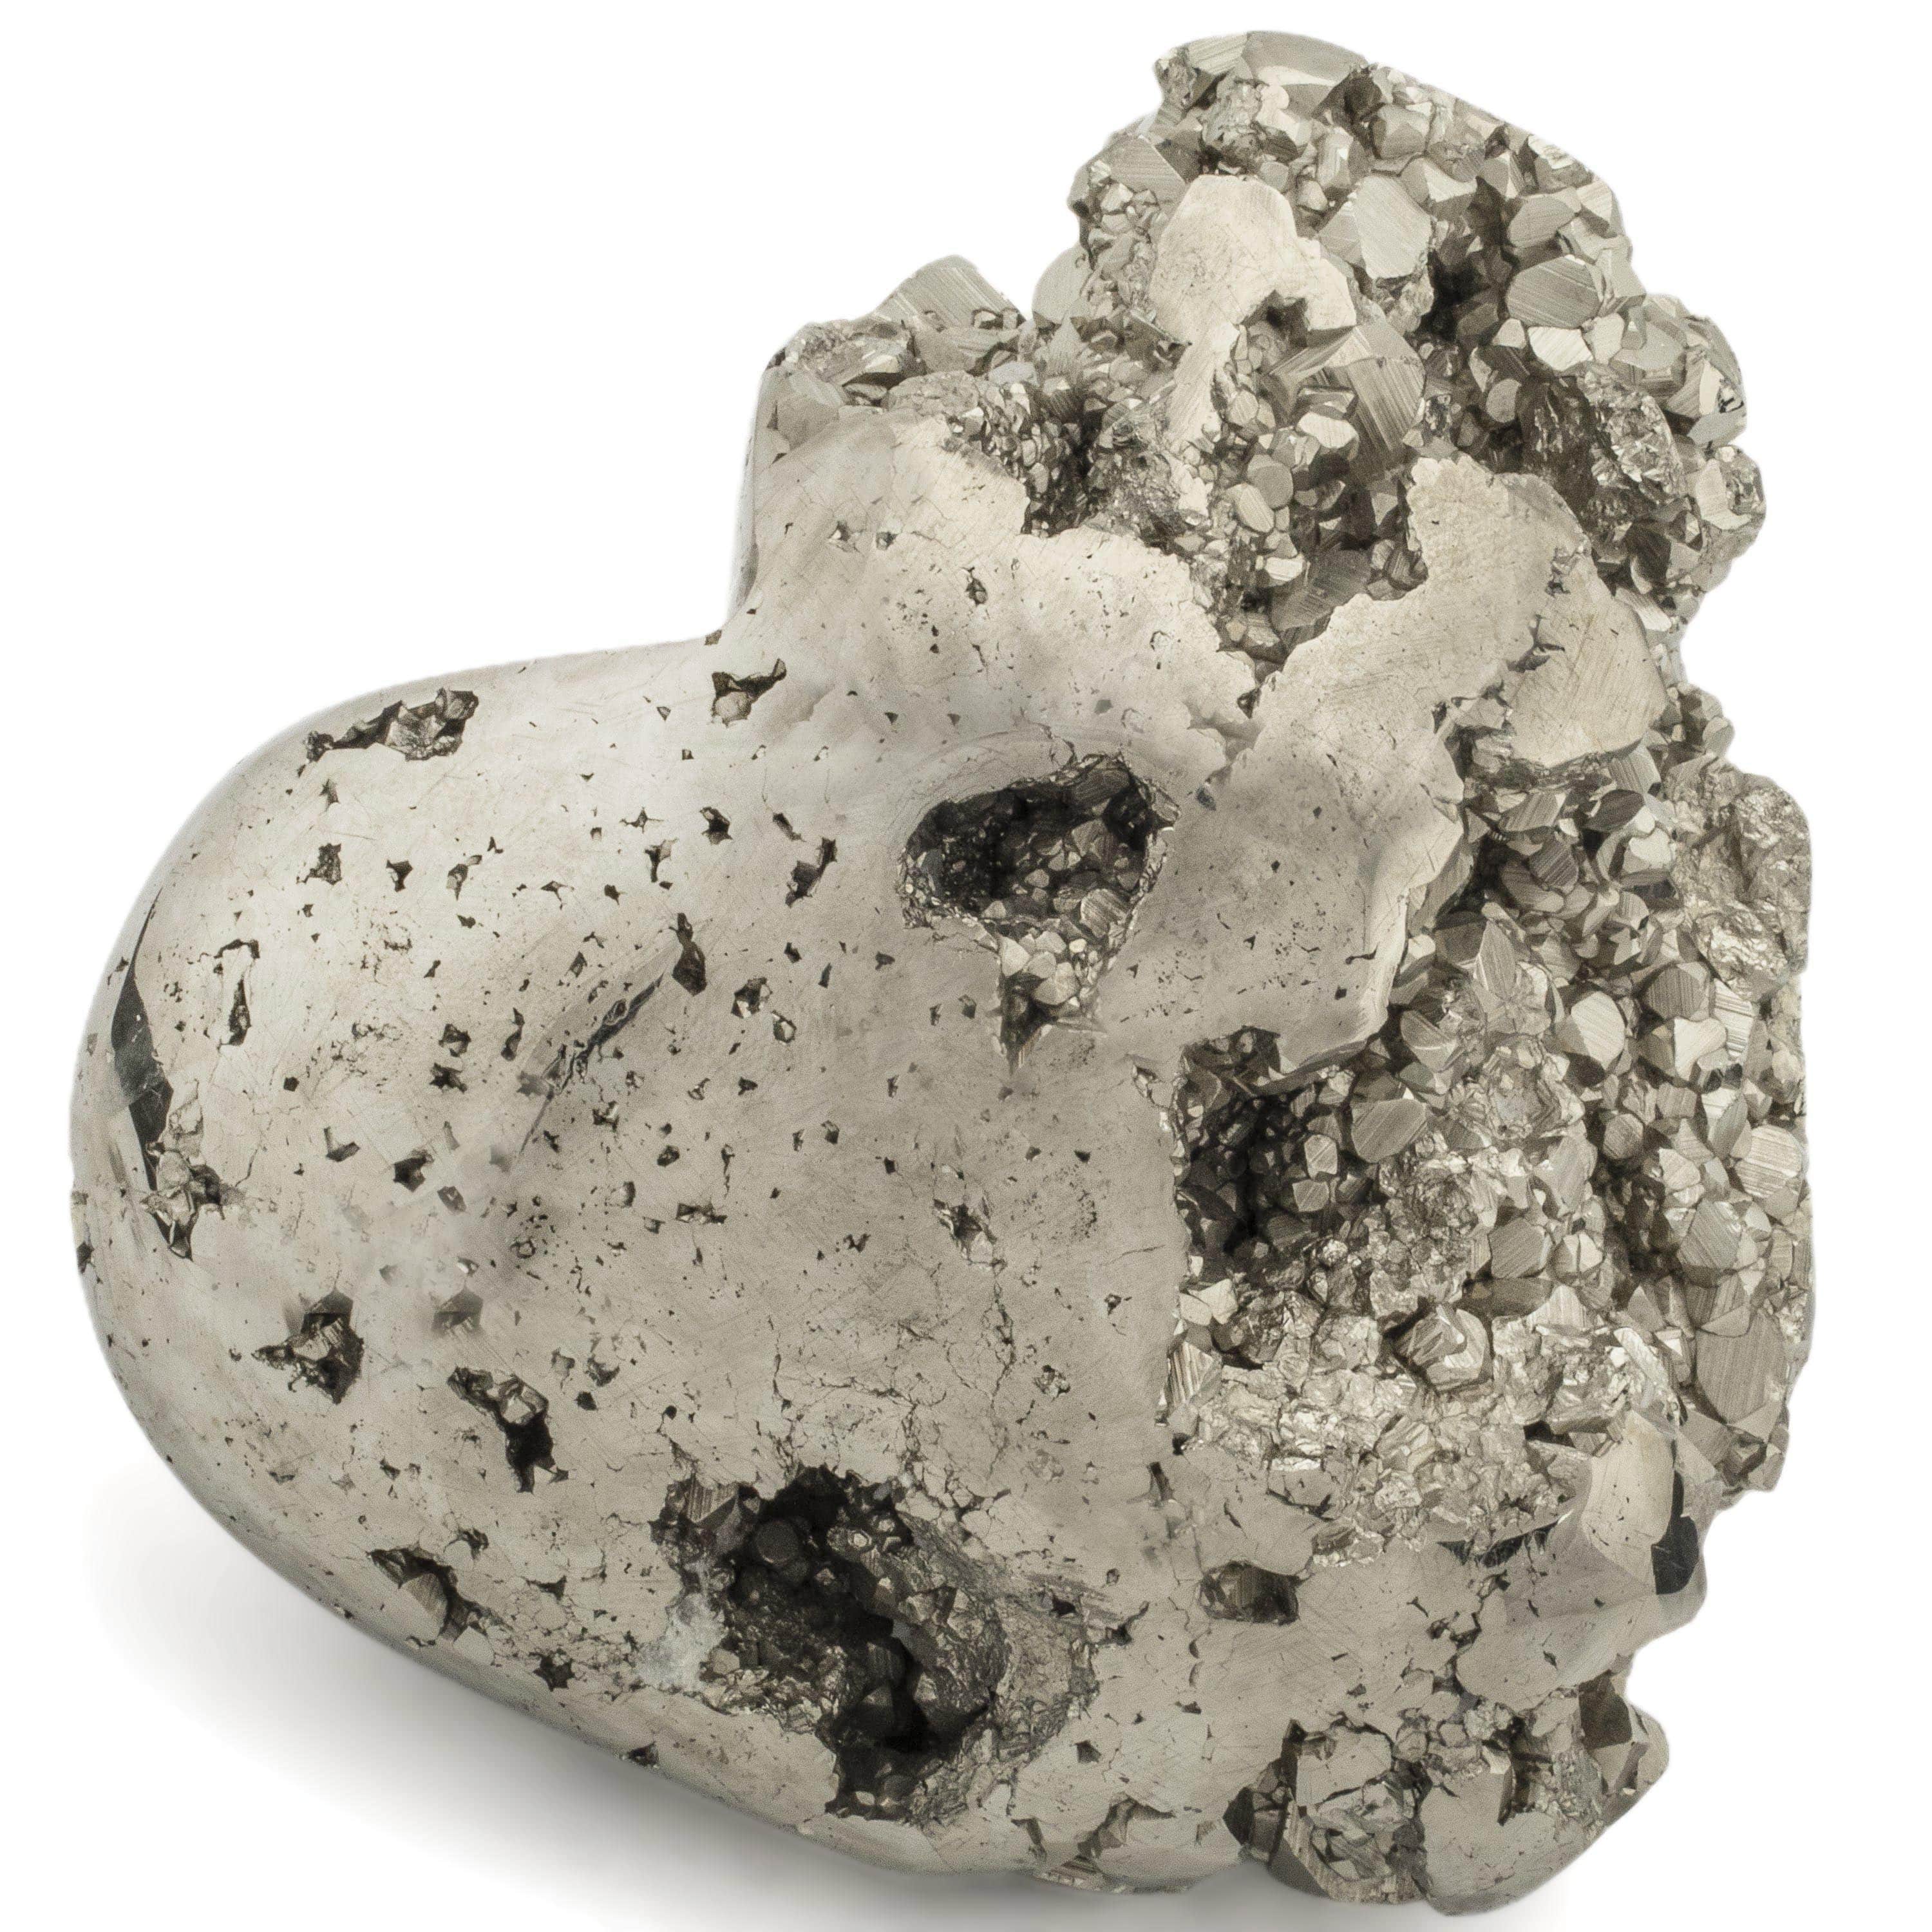 Kalifano Pyrite Pyrite Heart Carving 4.5" / 1,120 grams GH1200-PC.004